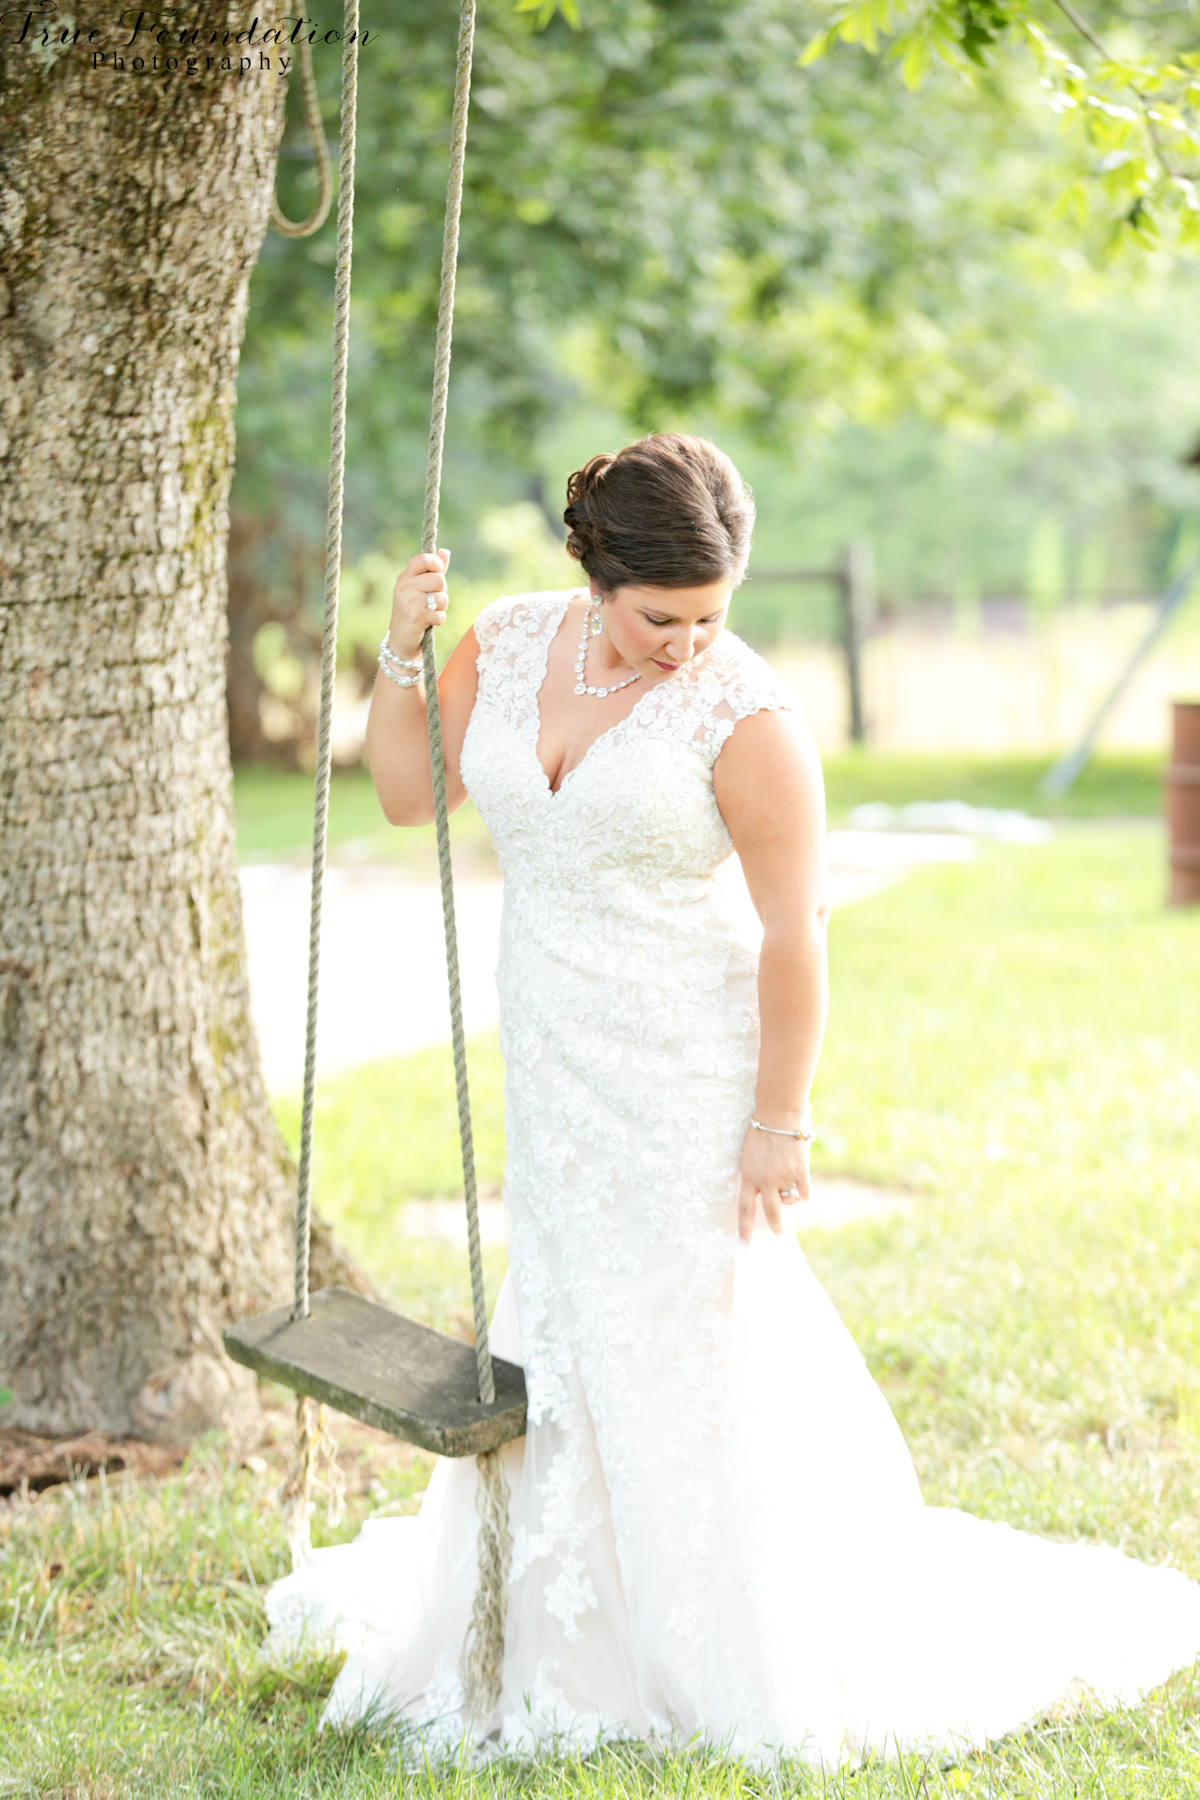 Bridal - Portrait - Photography - Photos - Hendersonville - NC - Shelby - Photographers - Farm - Country - Pinterest - Bride (26)